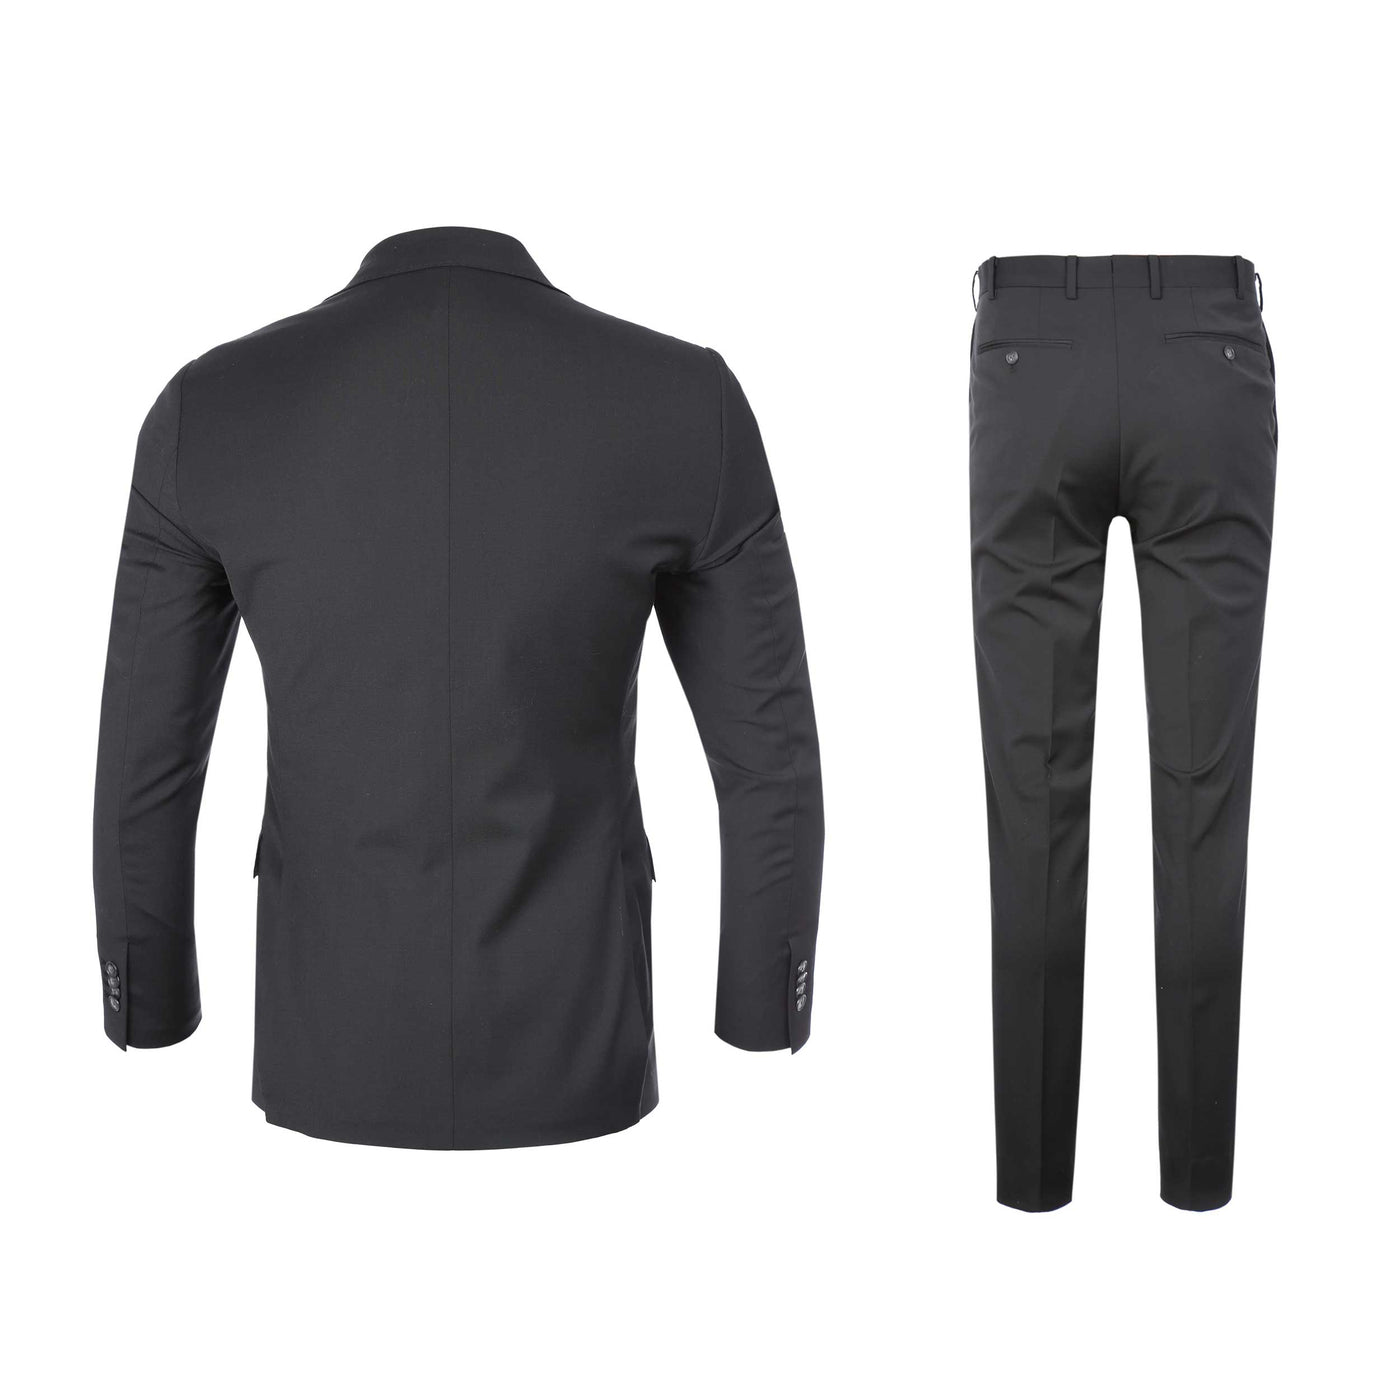 Norton Barrie Bespoke Suit in Black Suit Back